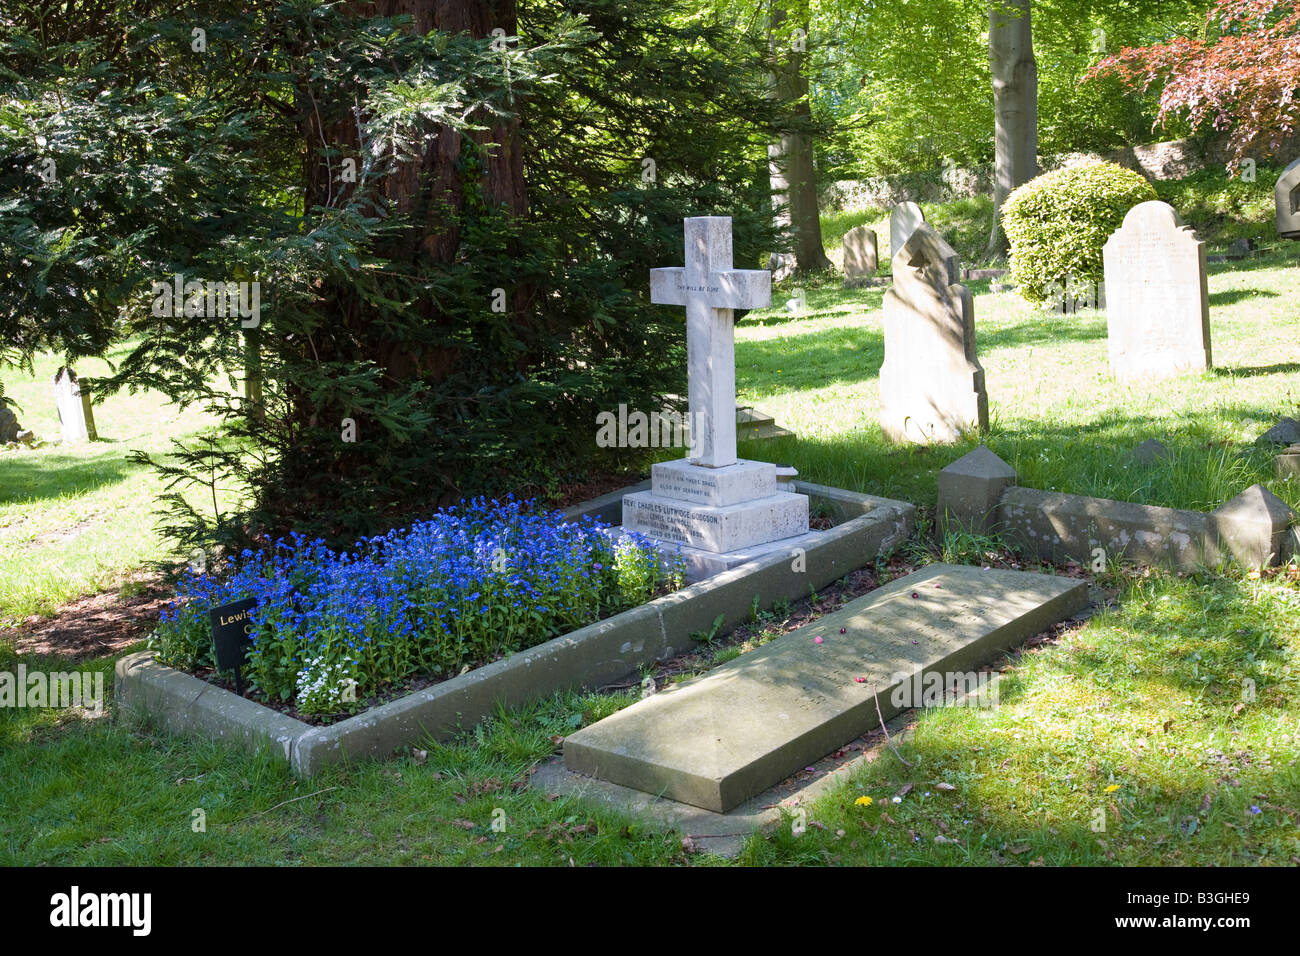 La tumba de Charles Lutwidge Dodgson aka Lewis Carroll en el Cementerio Mount, Guildford, Surrey, Inglaterra. Foto de stock